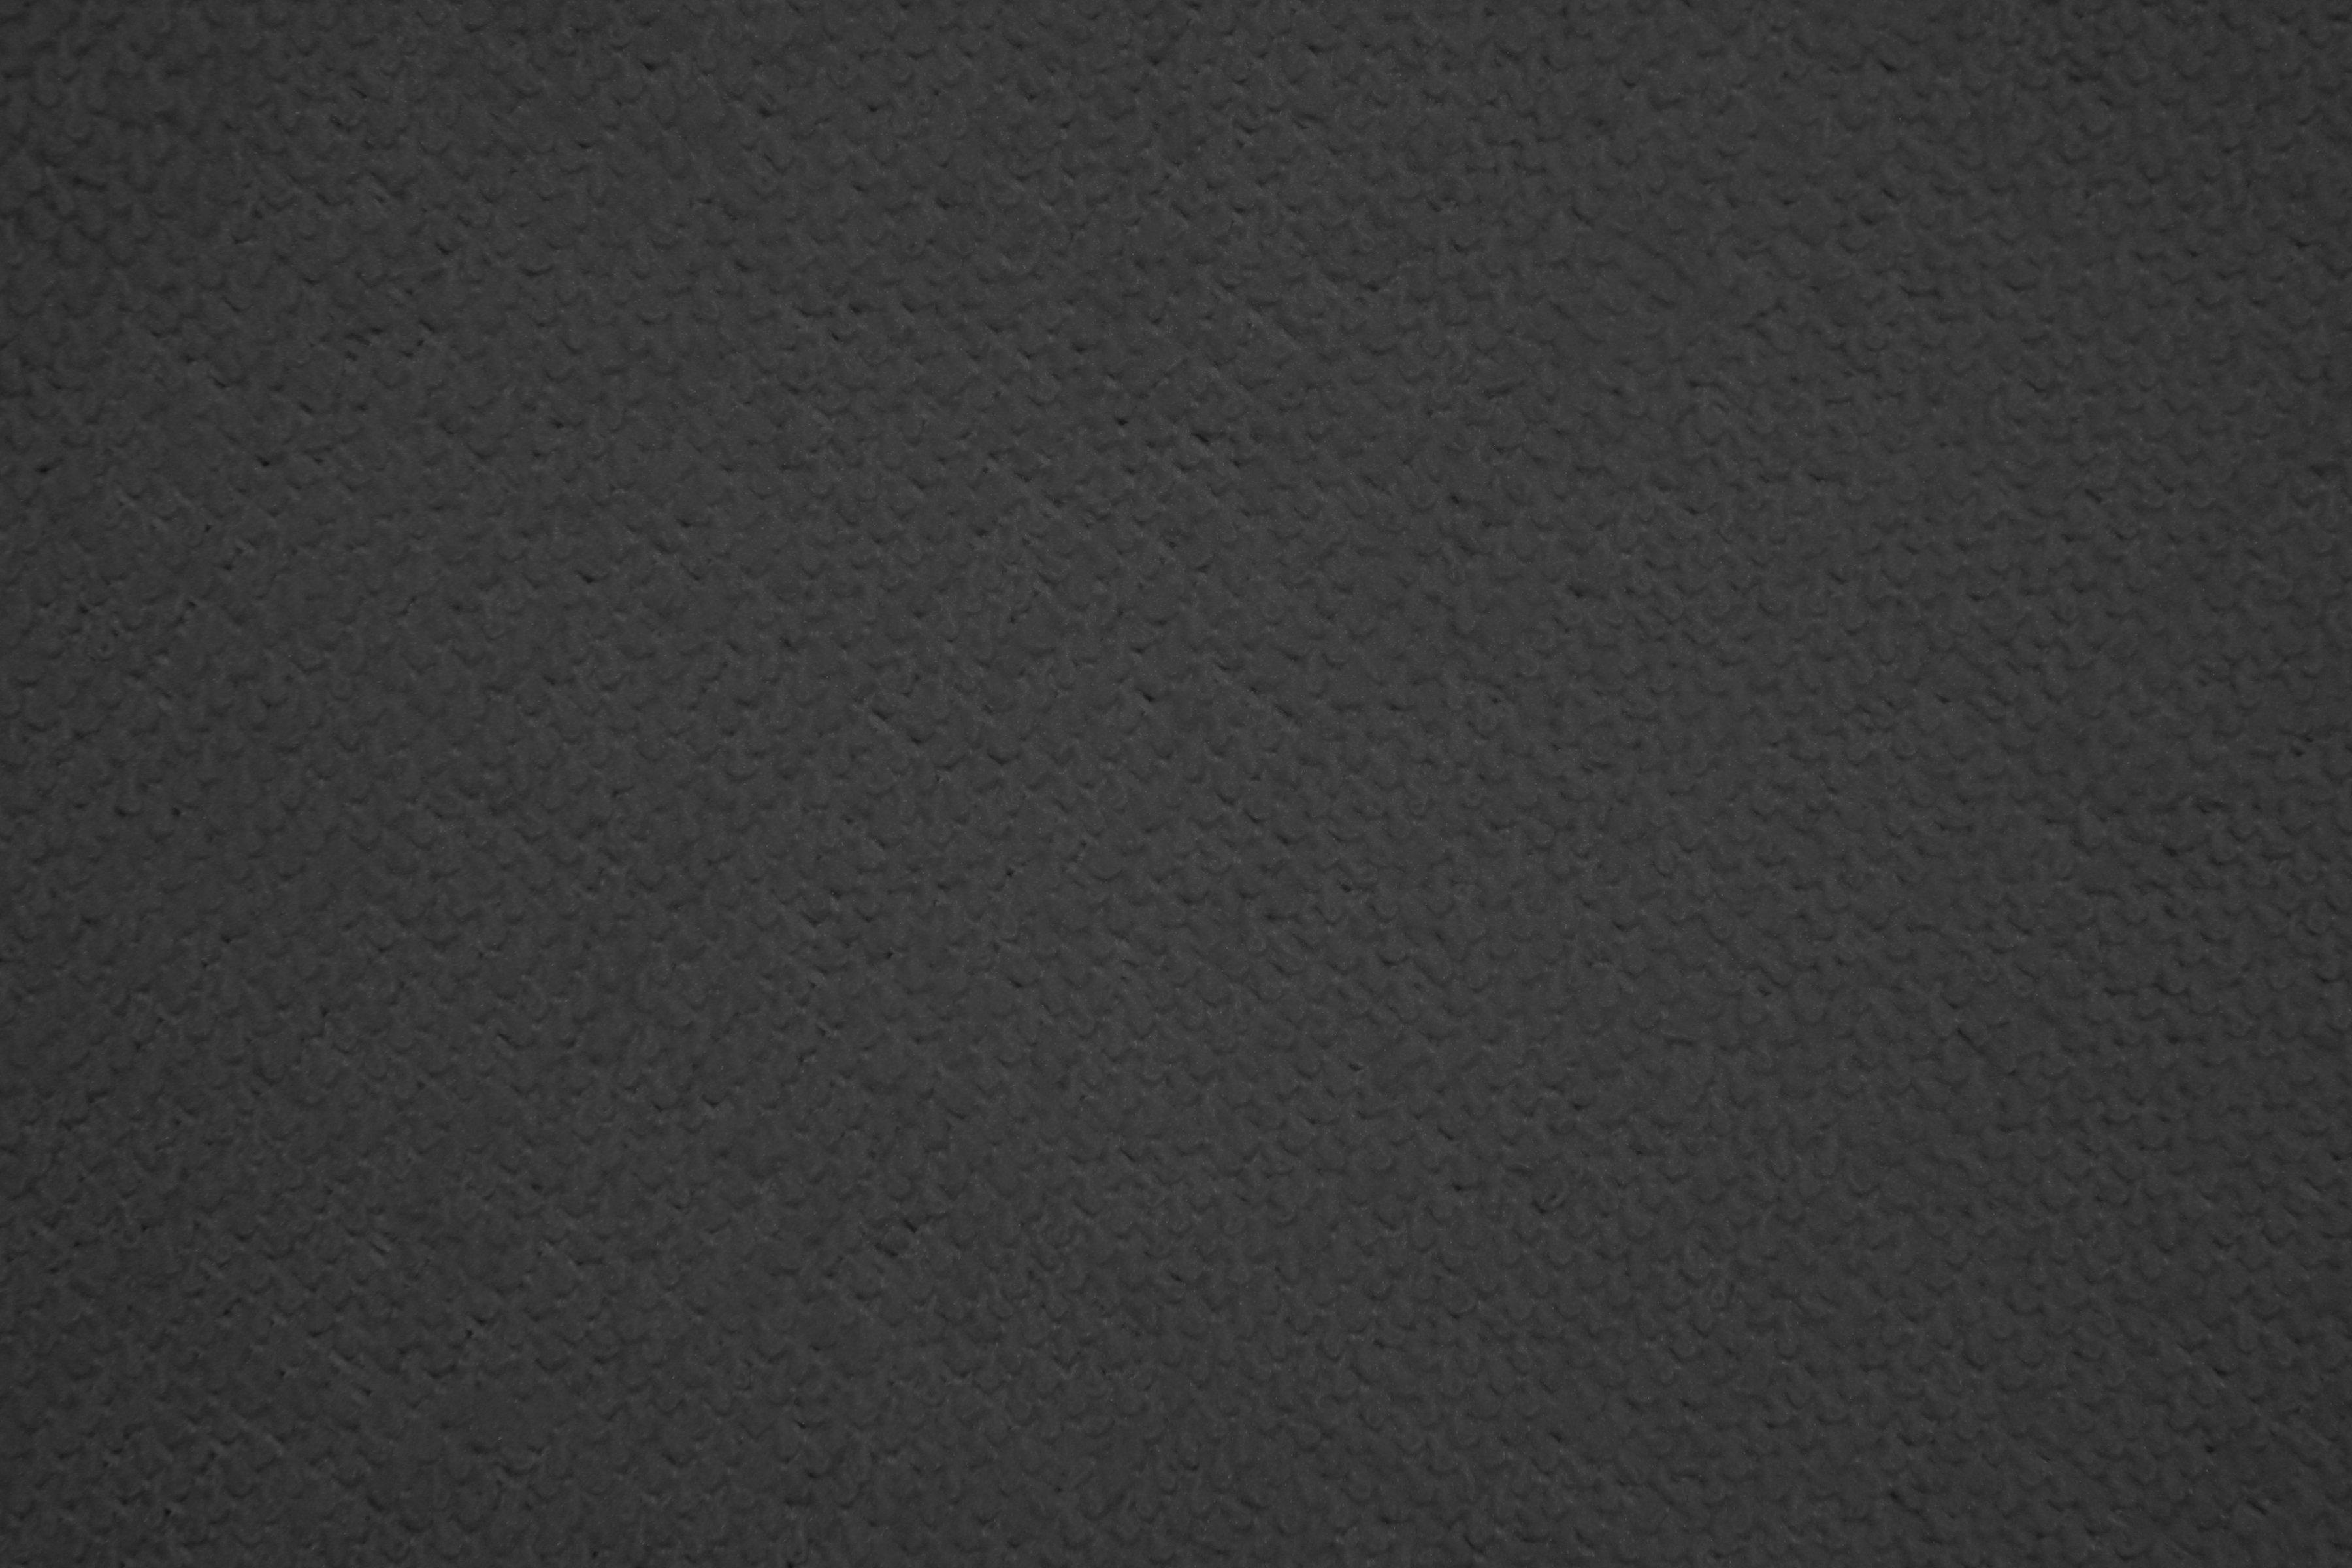 https://www.photos-public-domain.com/wp-content/uploads/2012/08/charcoal-gray-micro-fiber-cloth-fabric-texture.jpg